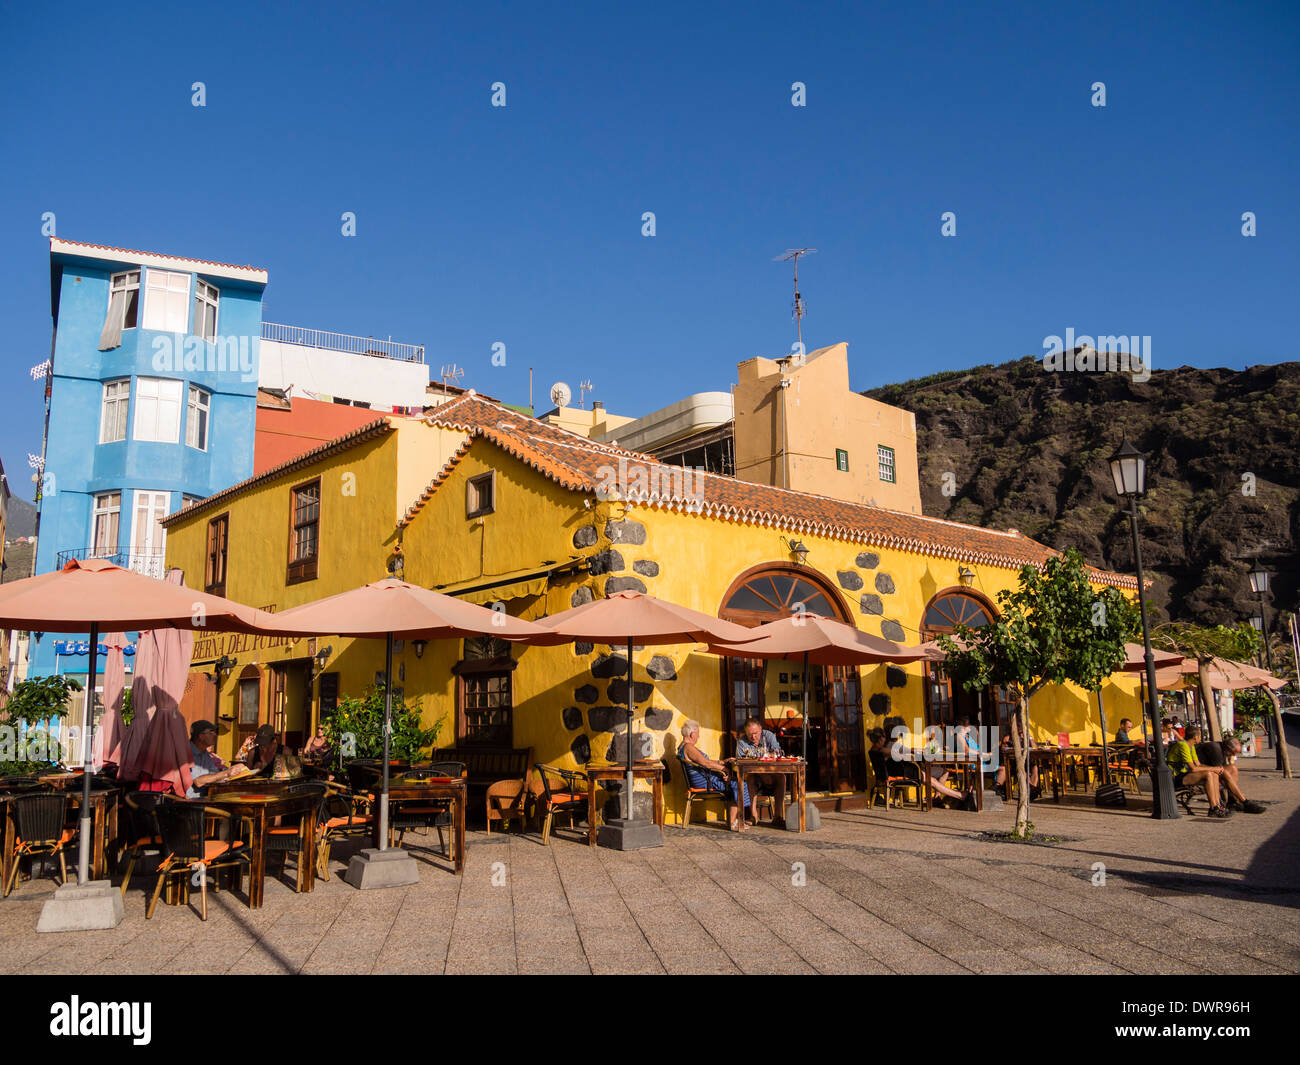 Touristen sitzen im Restaurant "Taberna del Puerto" am Strand von Puerto de Tazacorte auf der Kanareninsel La Palma. Stockfoto